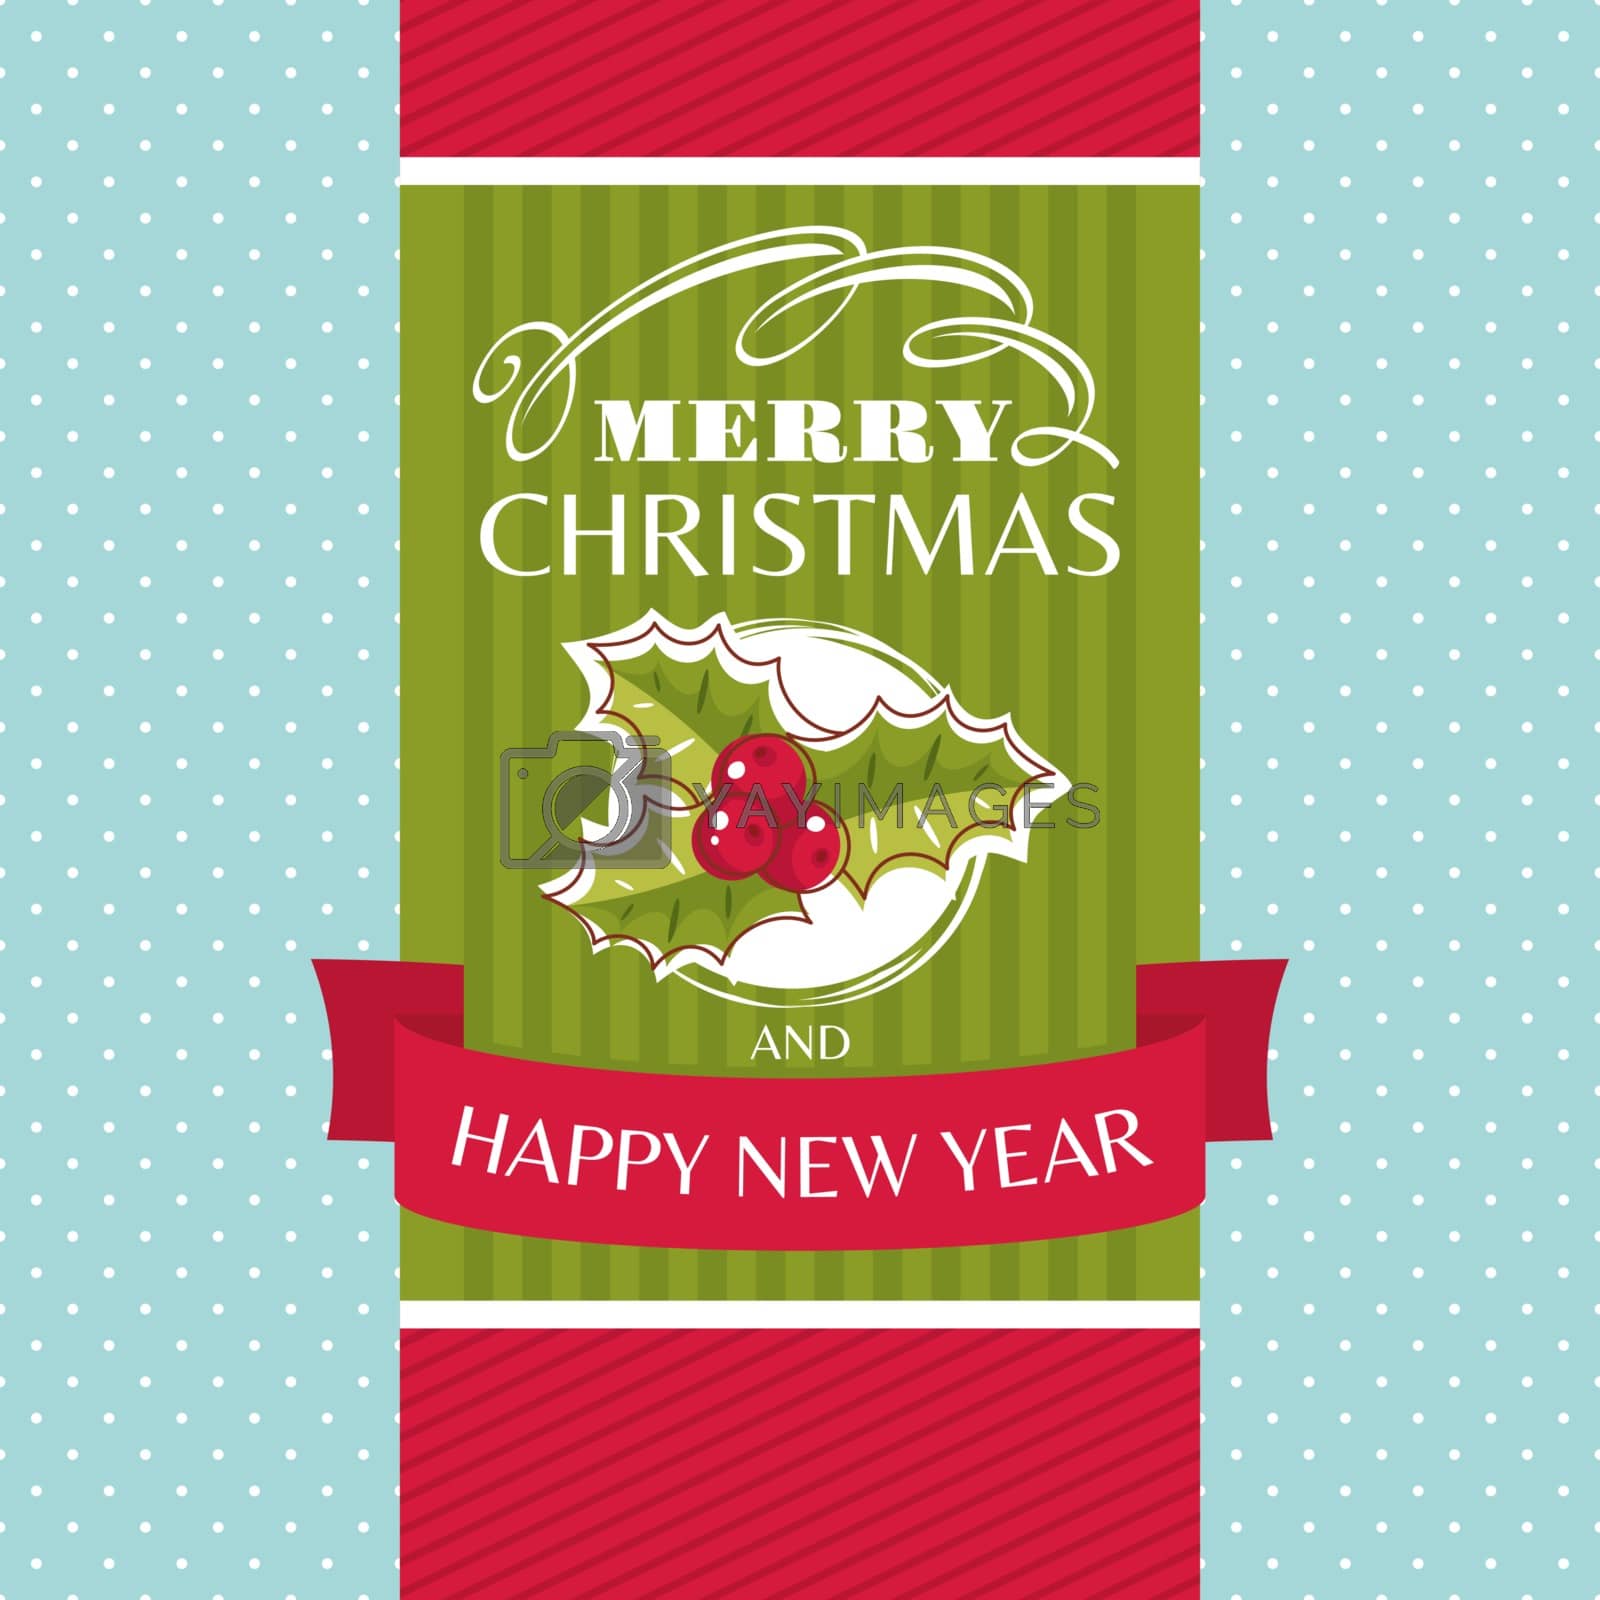 Royalty free image of Christmas greeting card by SelenaMay